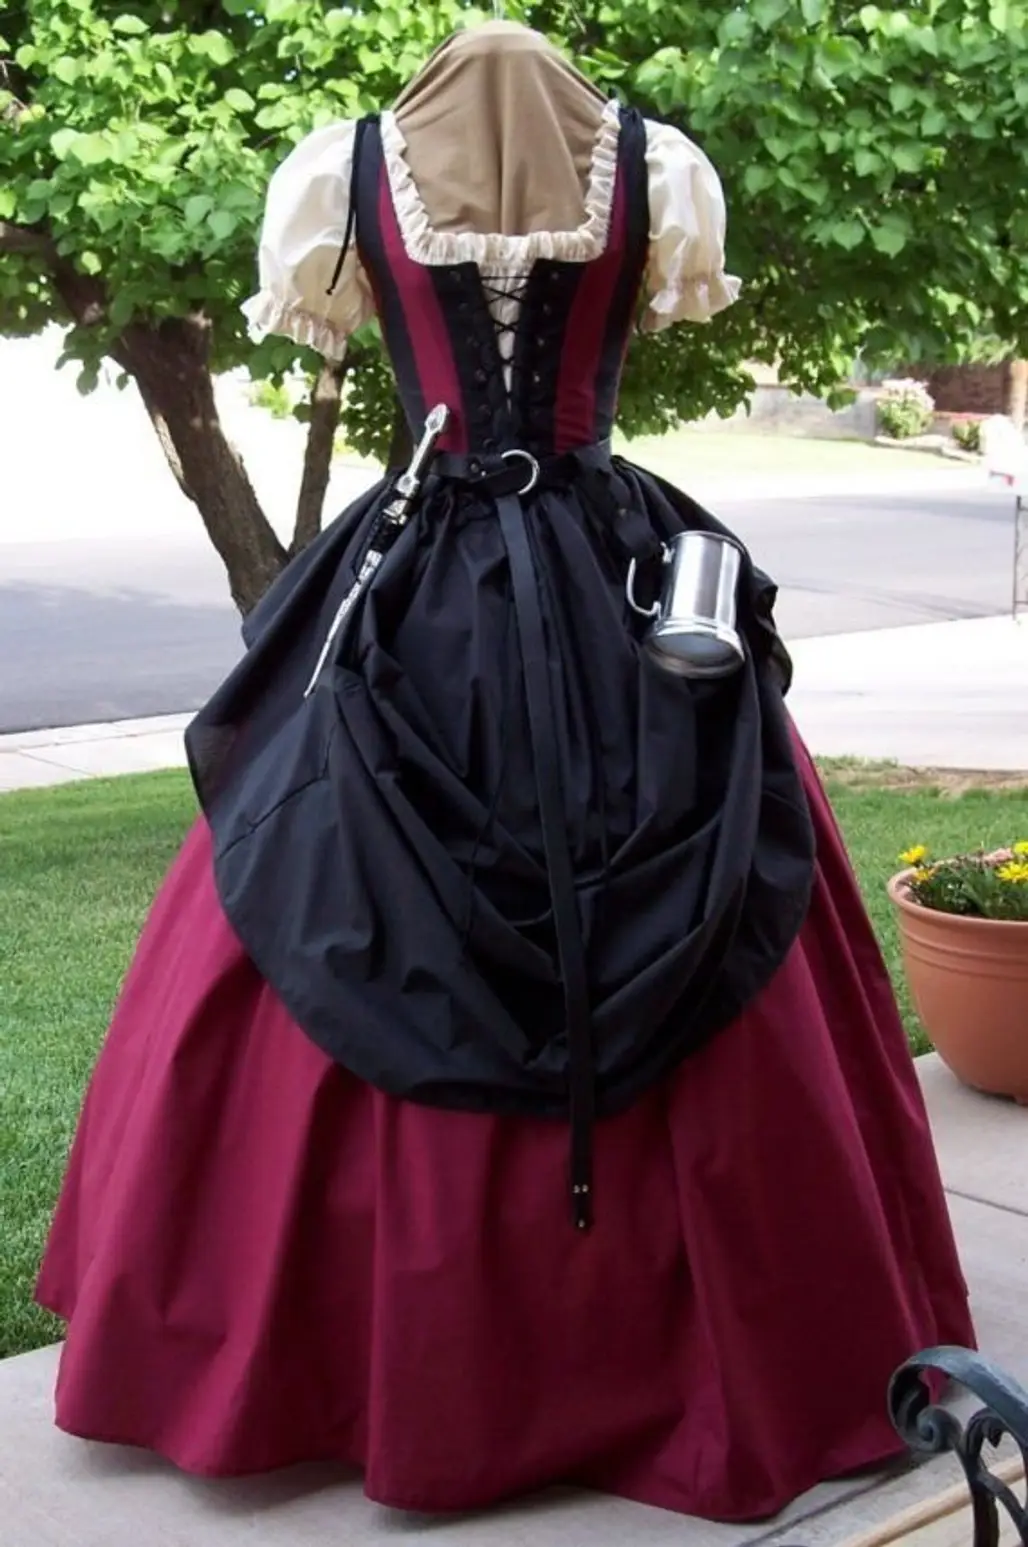 corset renaissance dress - Google Search  Renaissance fashion, Renaissance  clothing, Renaissance fair costume